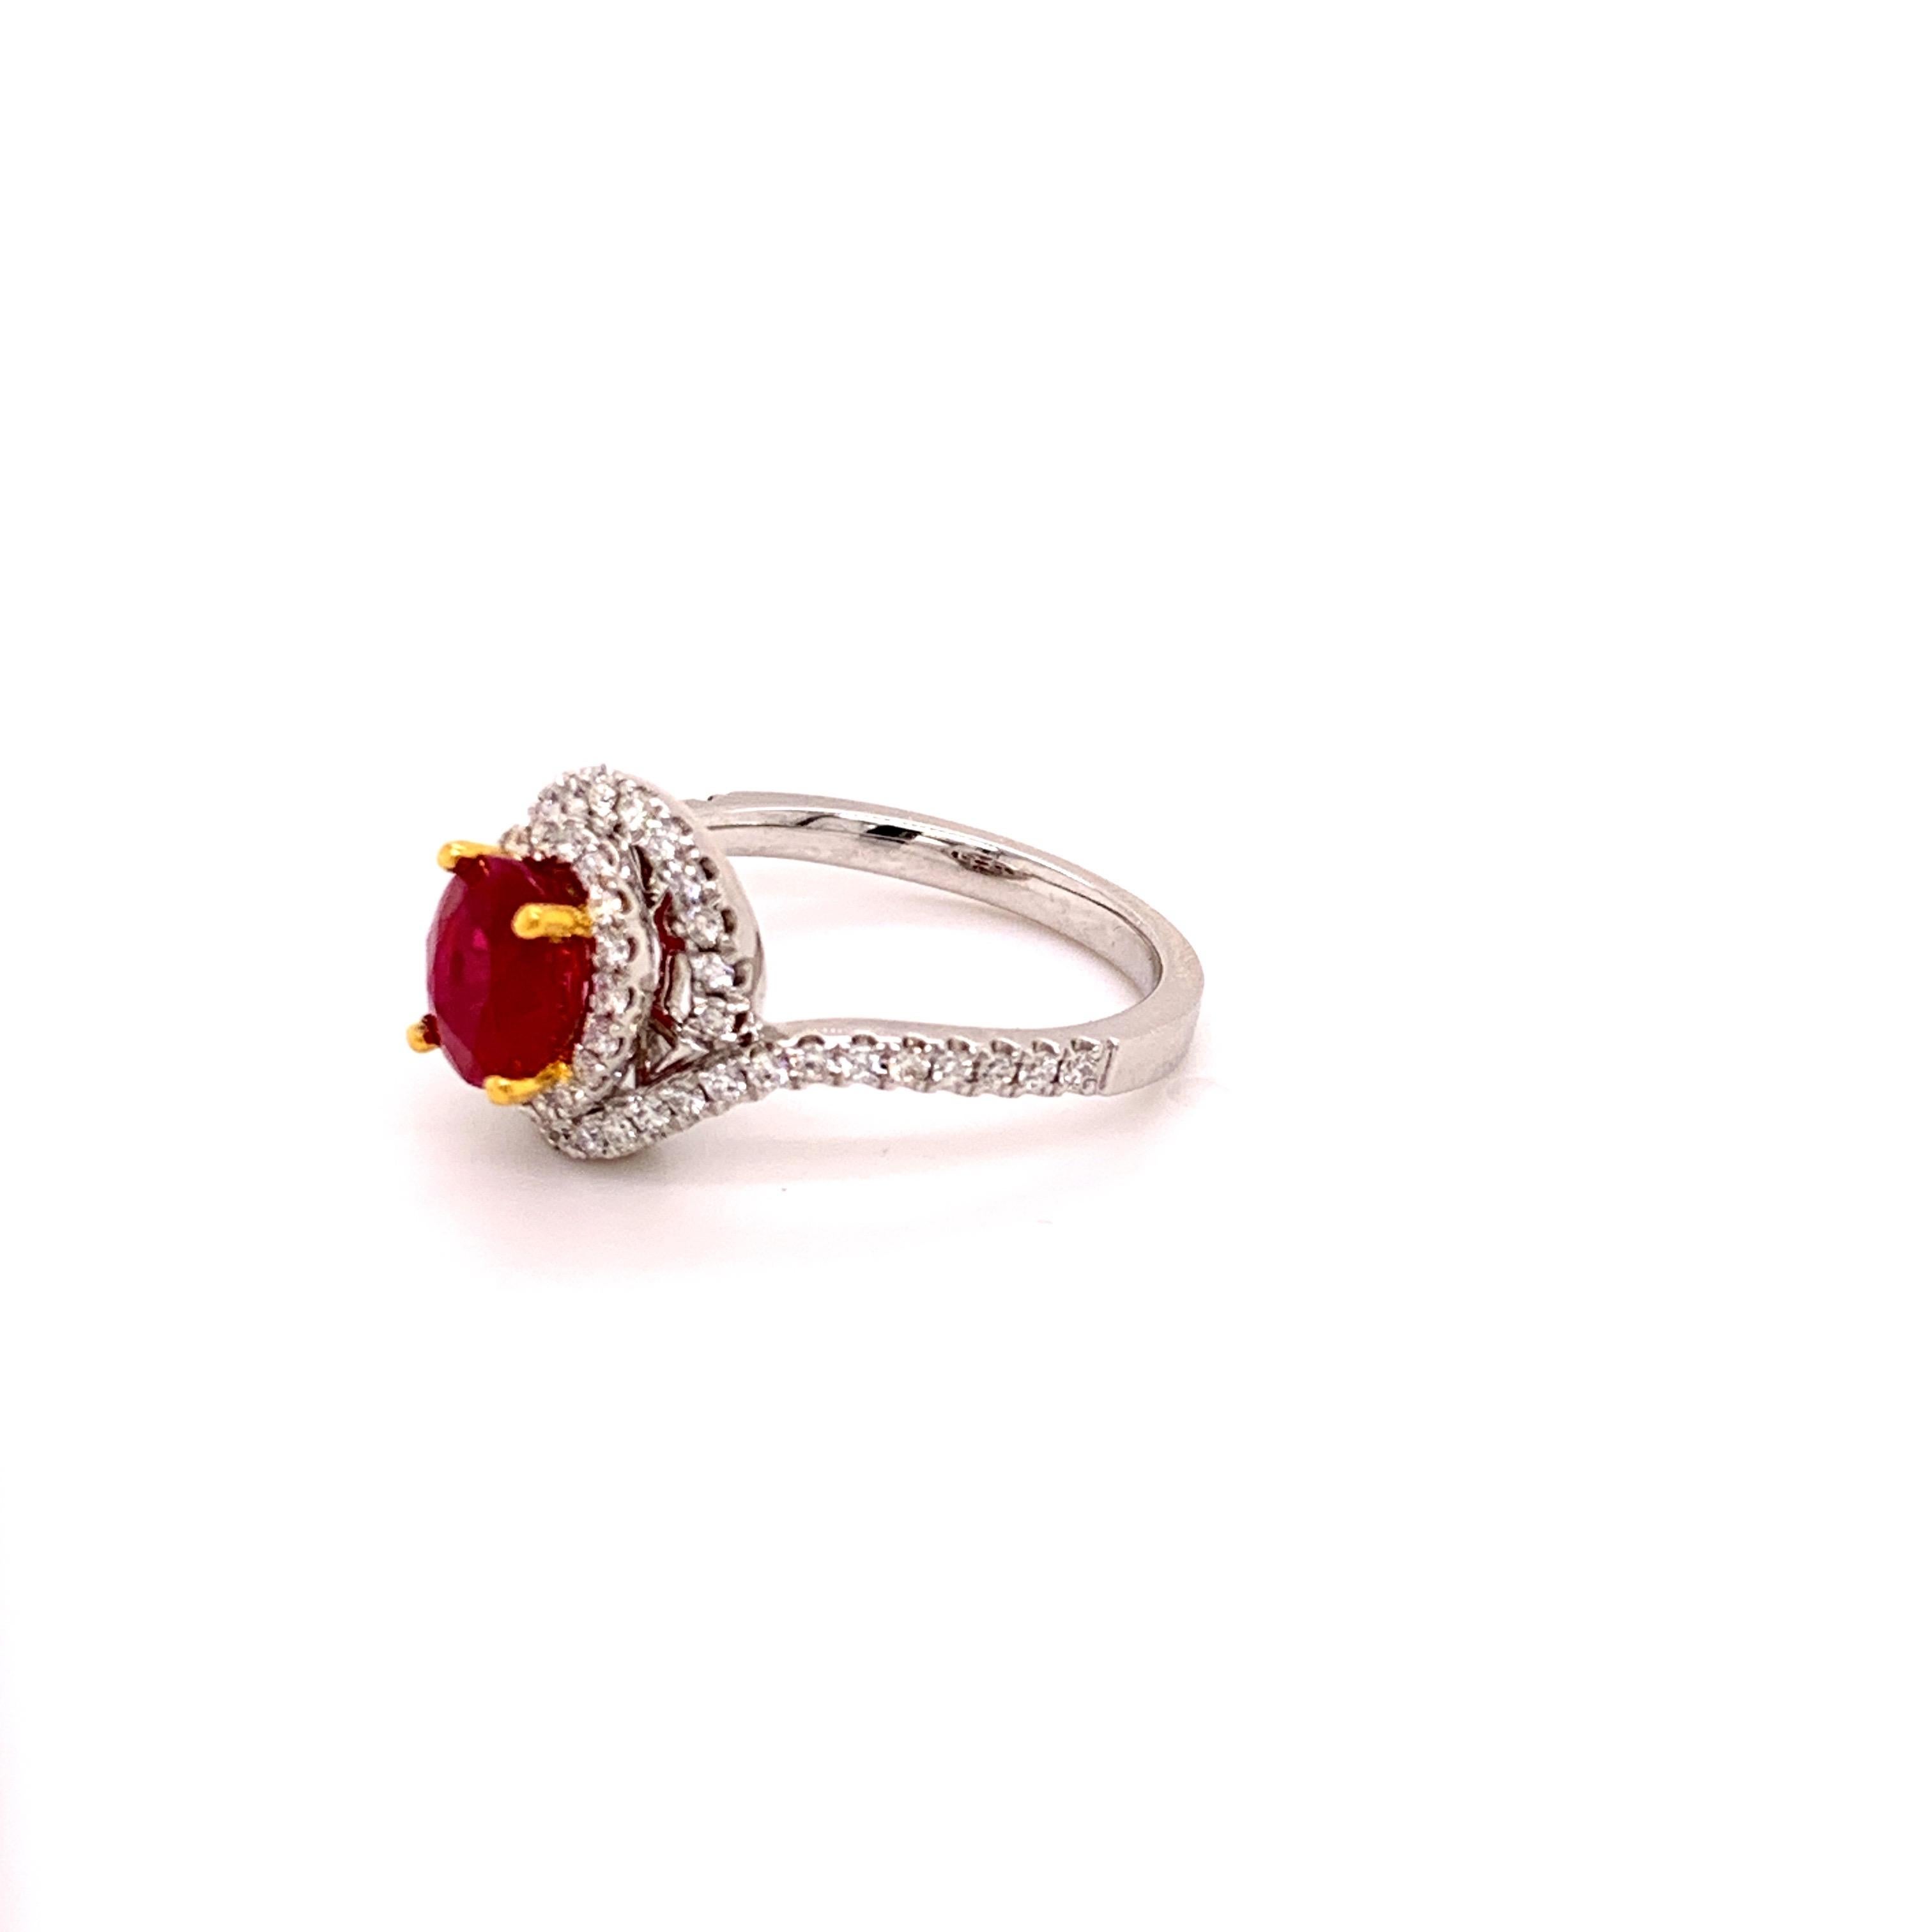 Oval Cut Burma 1.59 Carat Ruby Diamond Ring